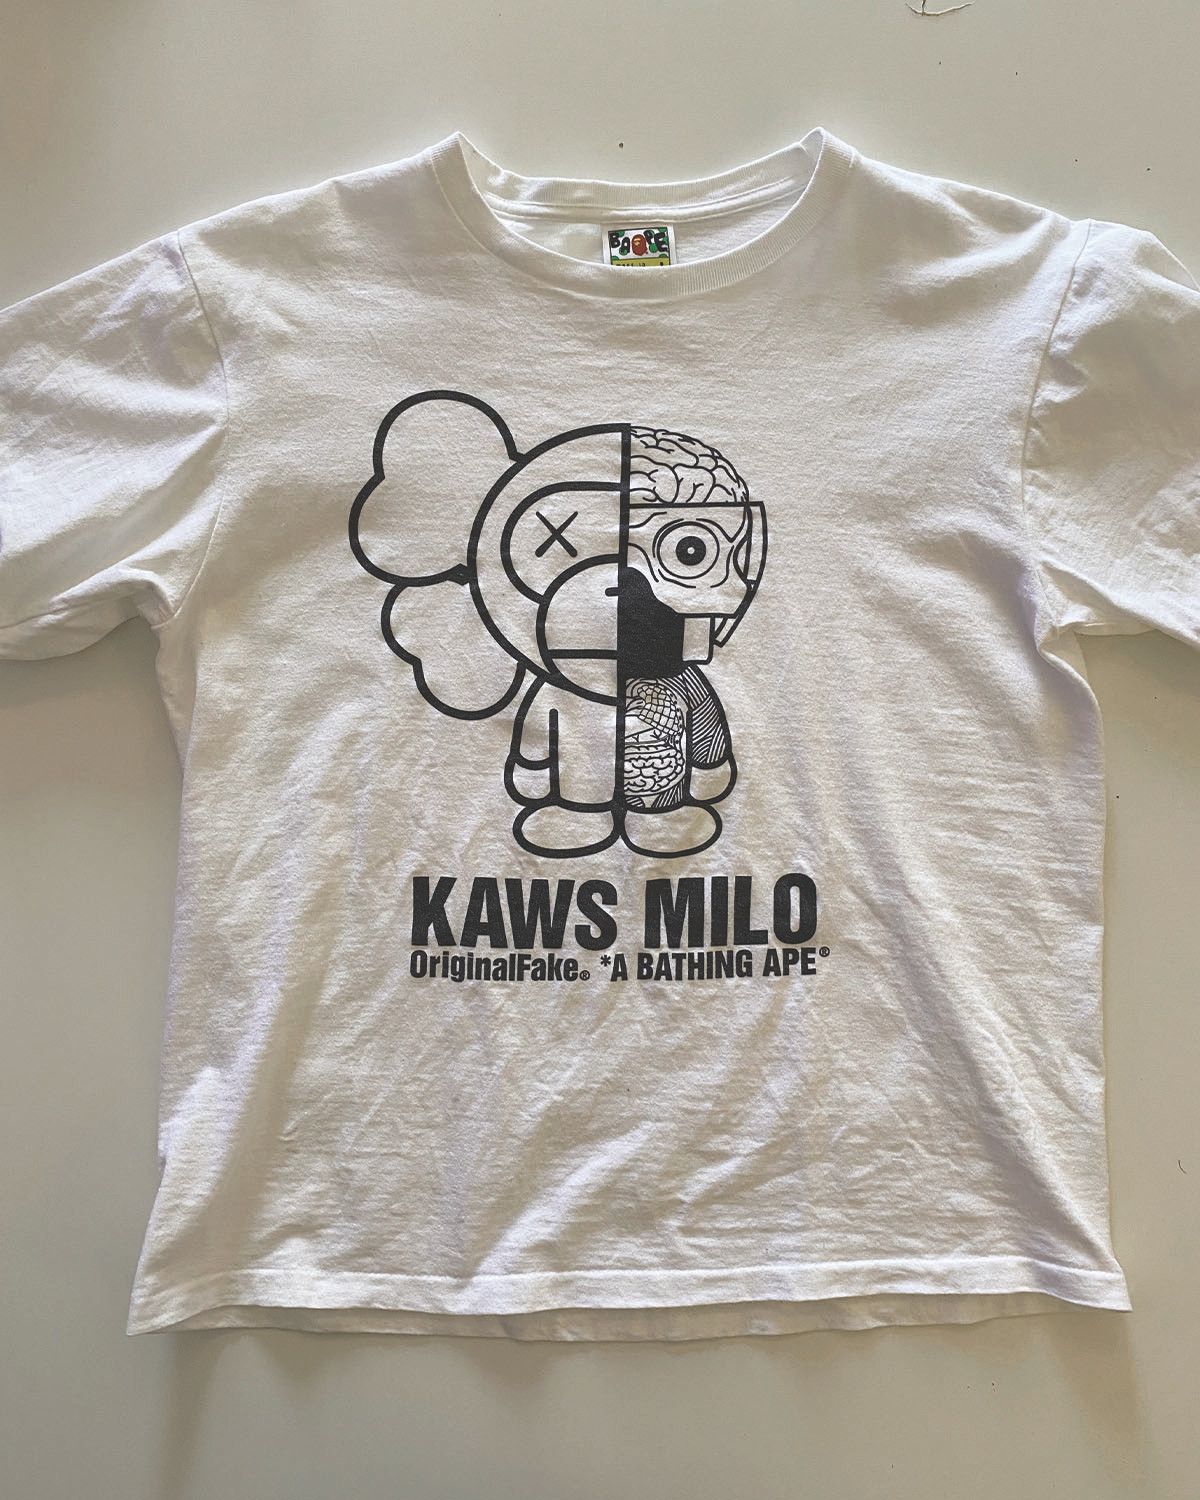 Bape Original Fake Baby Milo Kaws Tee | Grailed